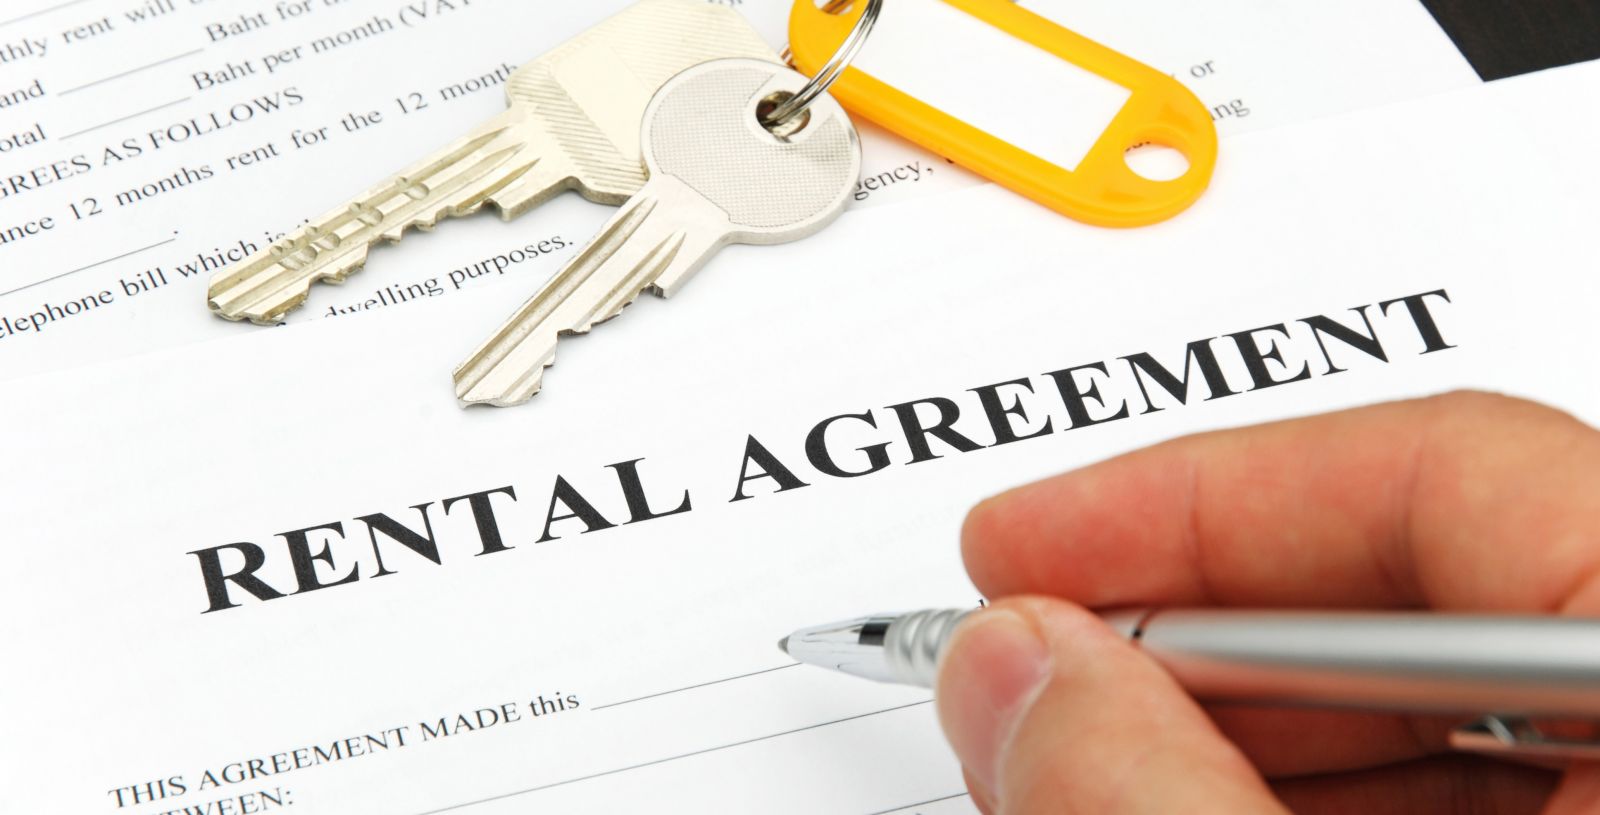 Rental agreement document.